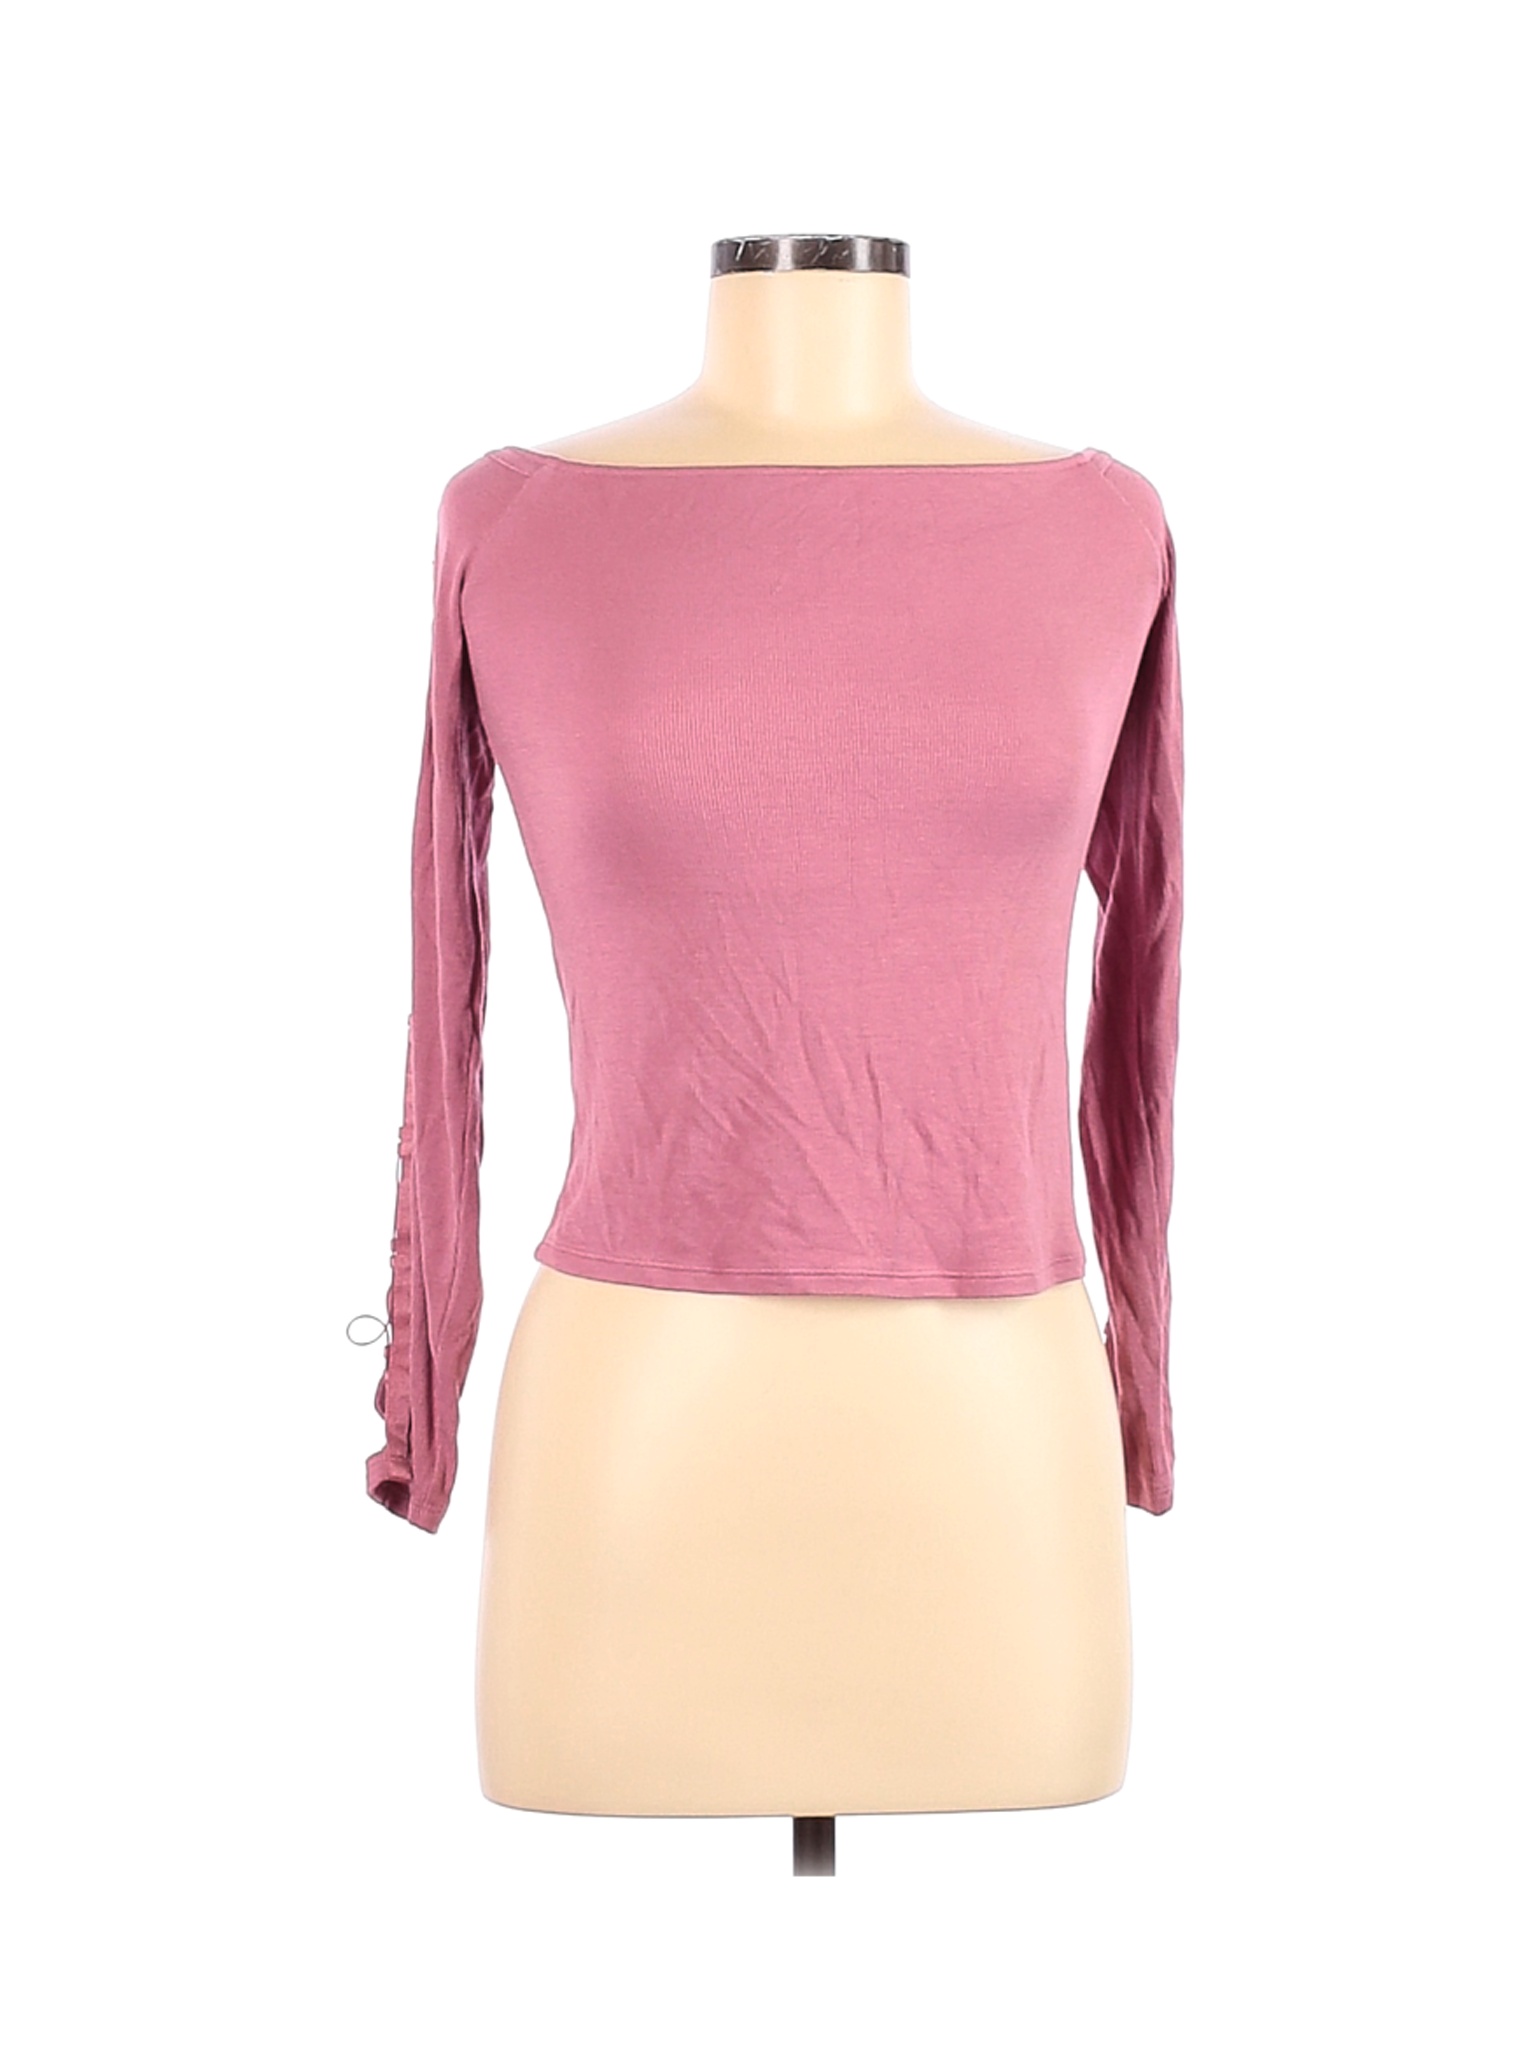 Guess Women Pink Long Sleeve Top M | eBay